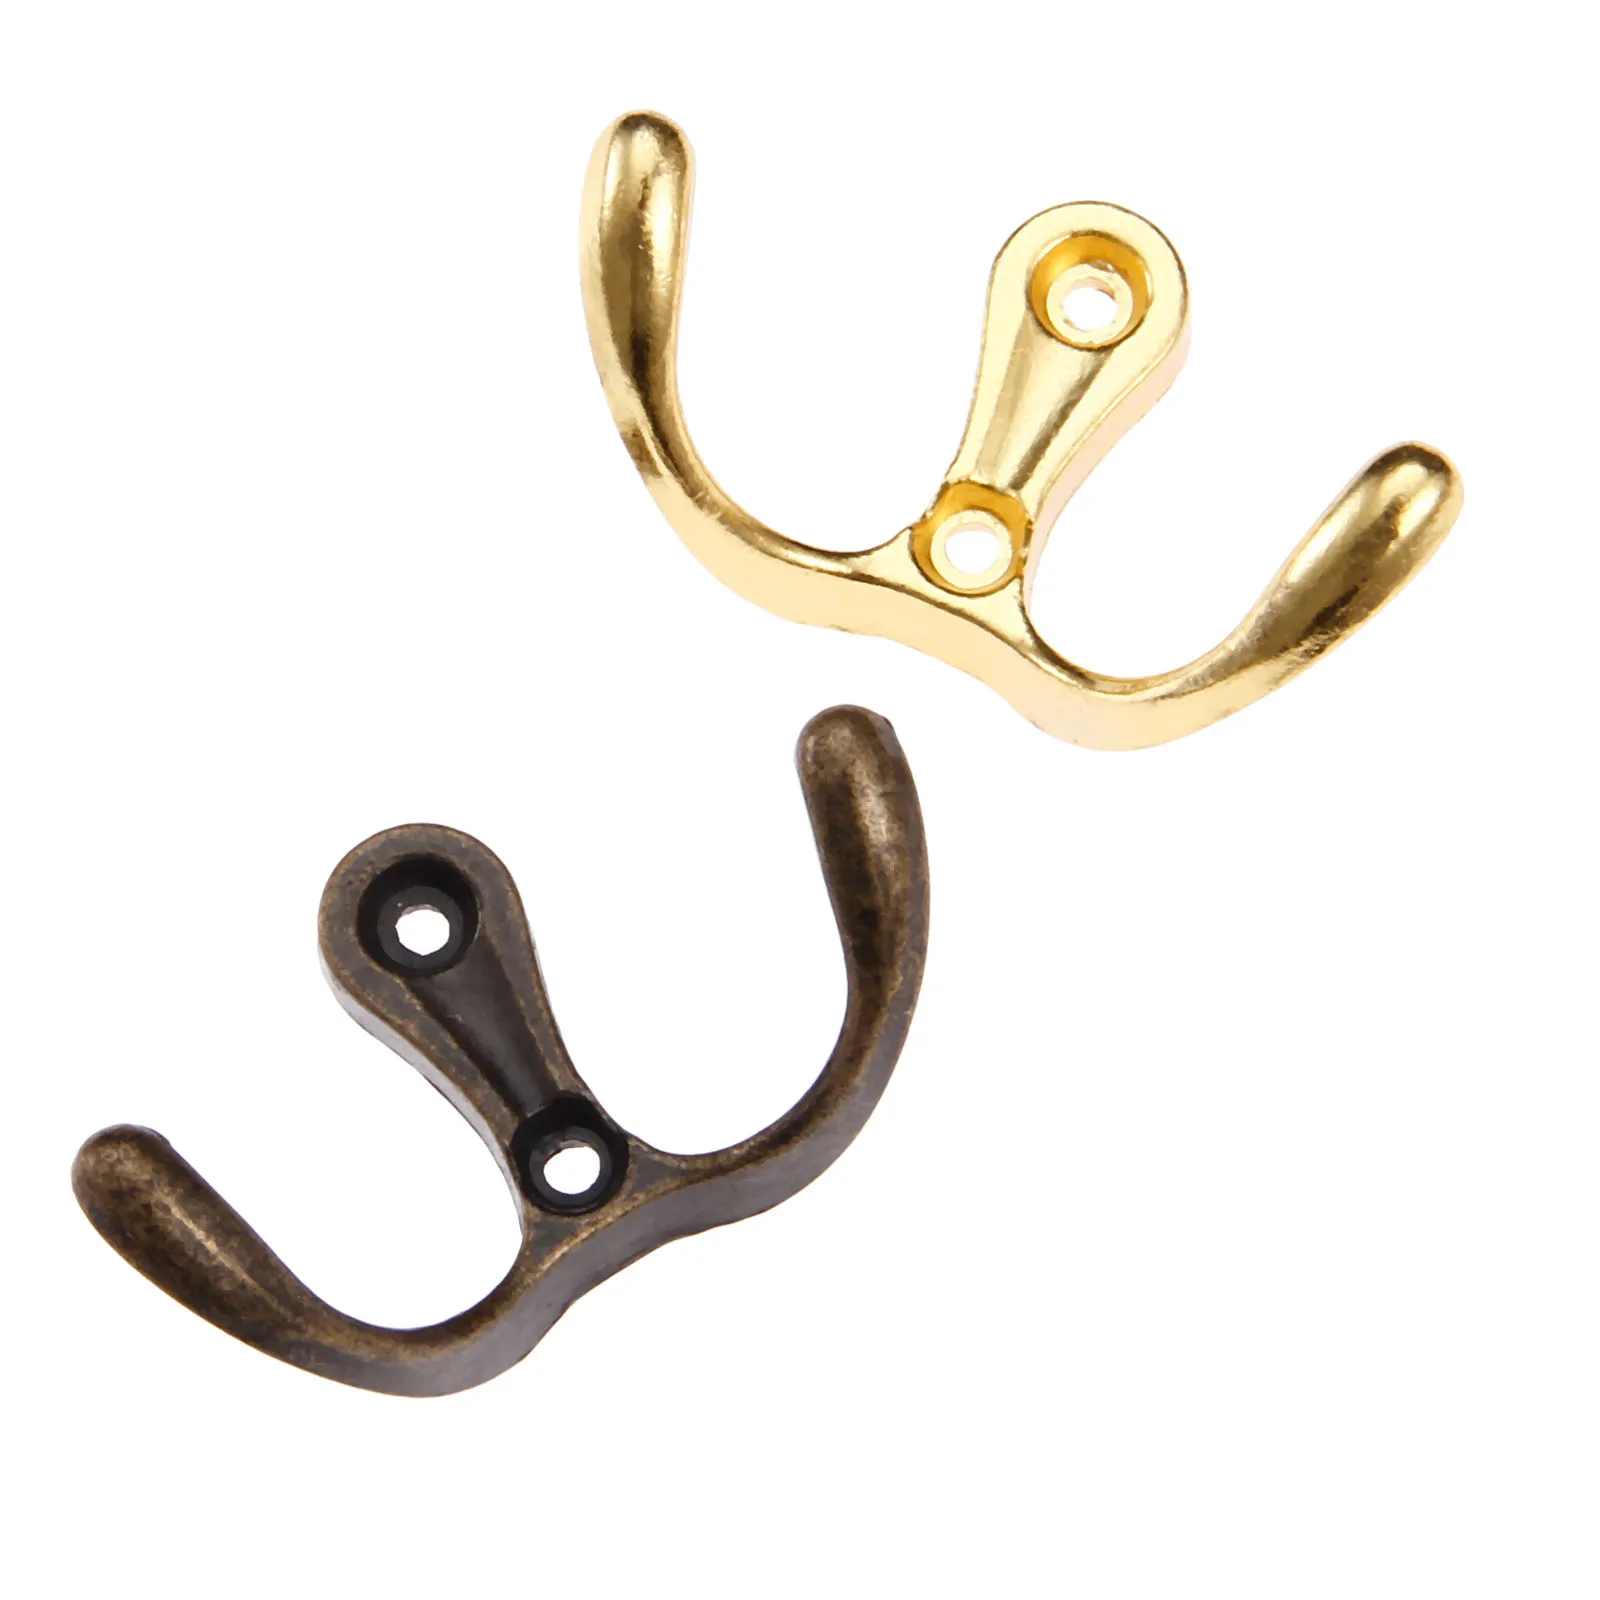 2pcs Double Head Hooks Wall Mounted Hanger w/screws Antique bronze/Gold Coat/Key/Bag/Towel/Hat Holder Bathroom Kitchen 53mmx30mm images - 6